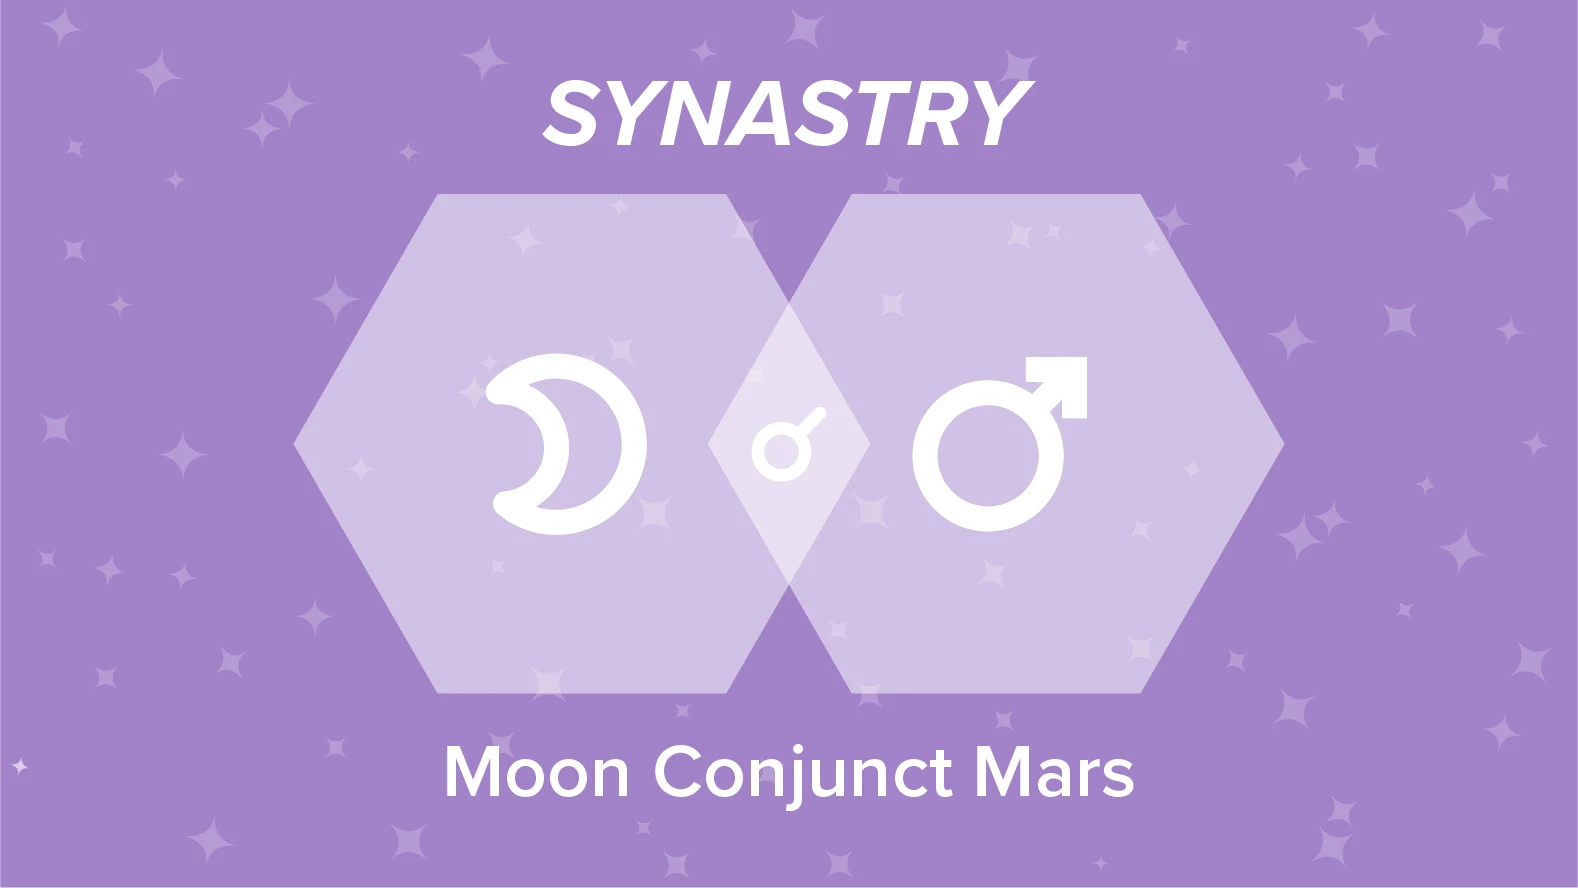 Moon Conjunct Mars Synastry